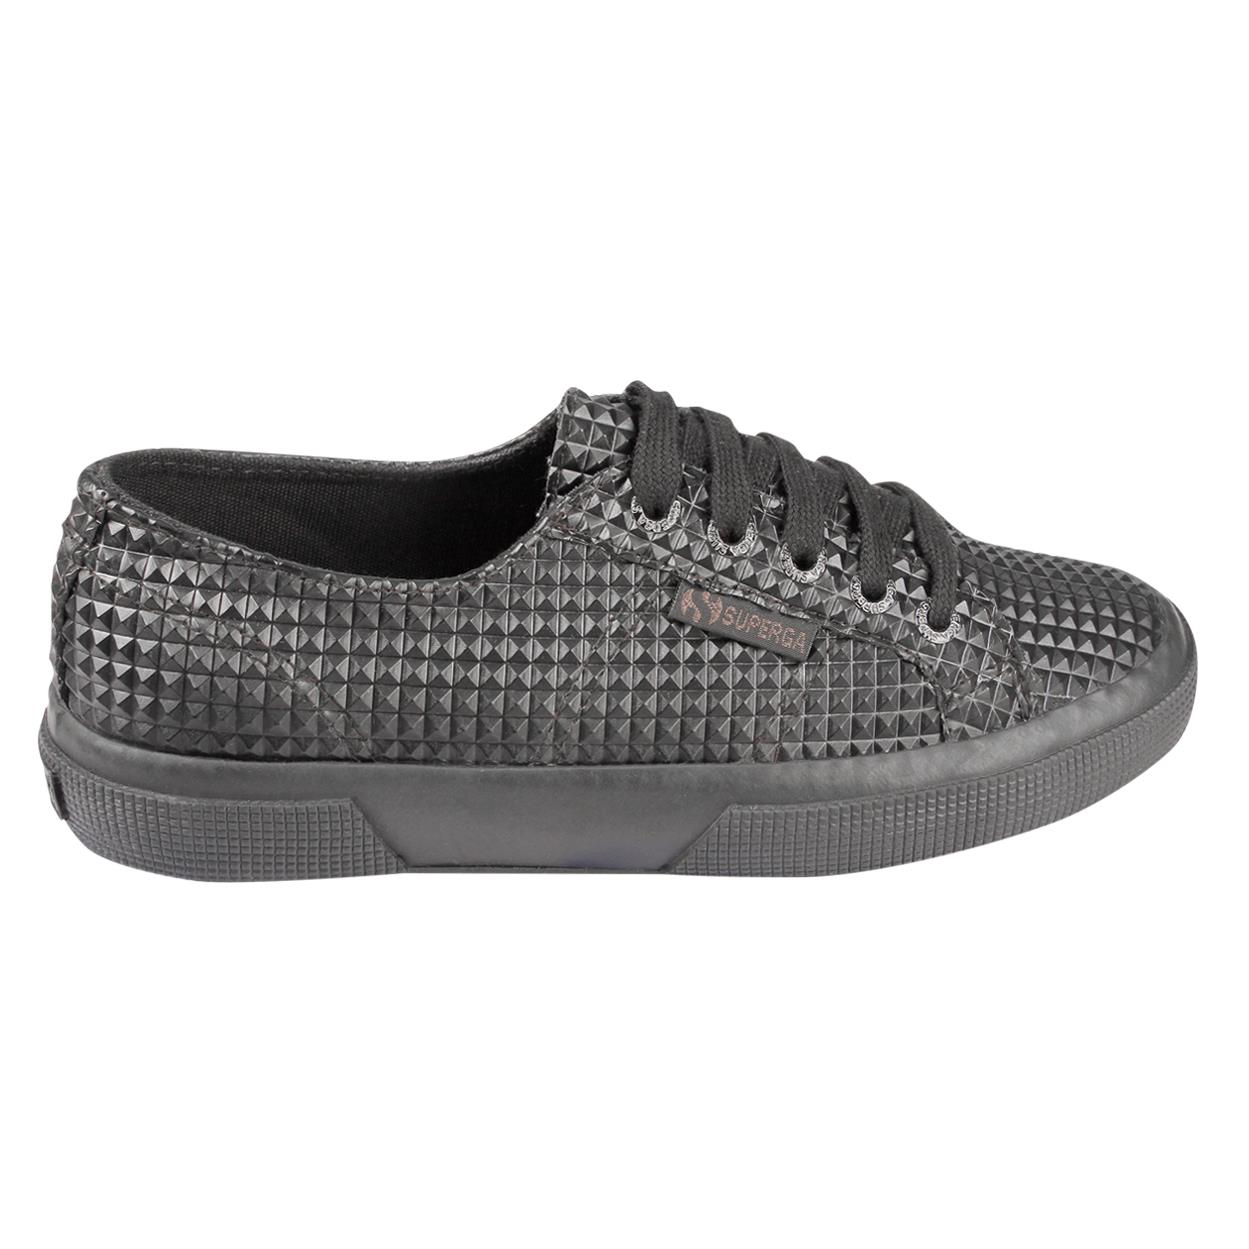 [HONEYDEAL13] Giày sneaker unisex 2750 Fashion Superga màu đen - S009Y80_902_F16